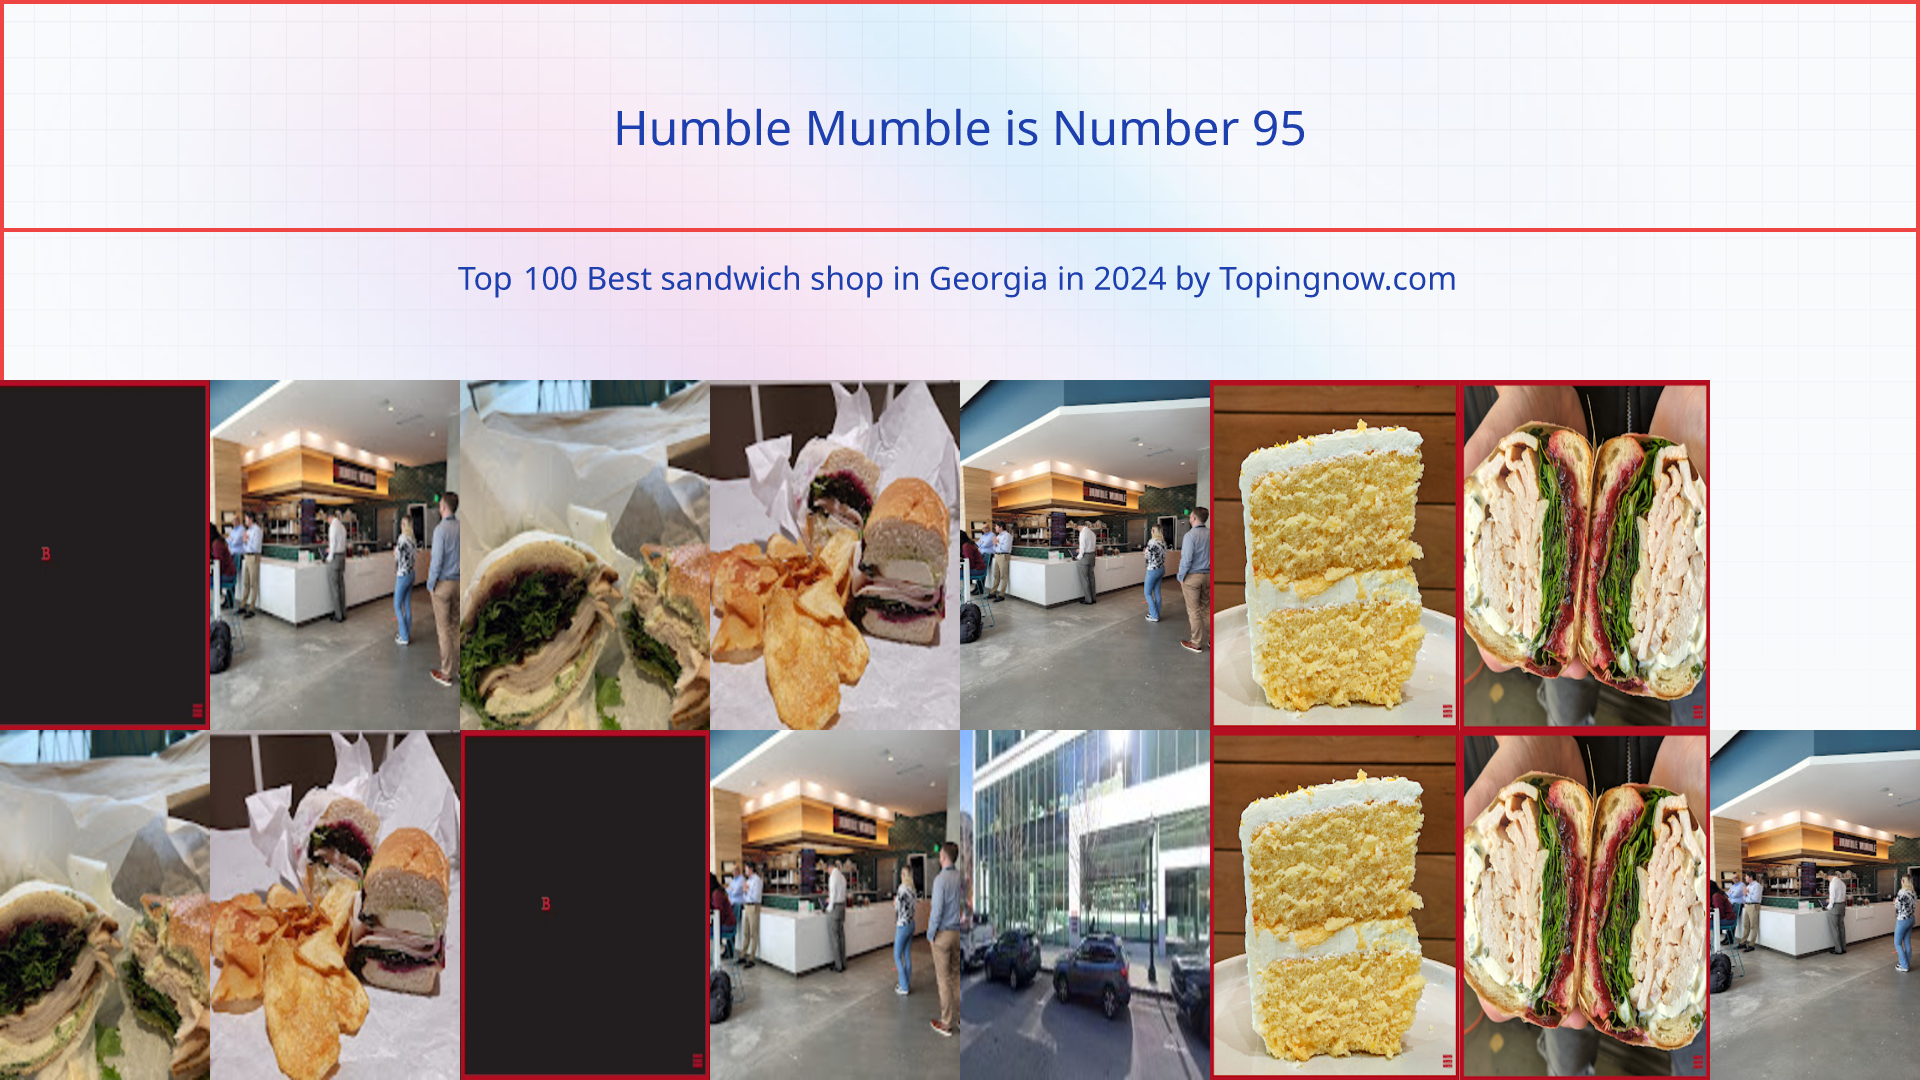 Humble Mumble: Top 100 Best sandwich shop in Georgia in 2024